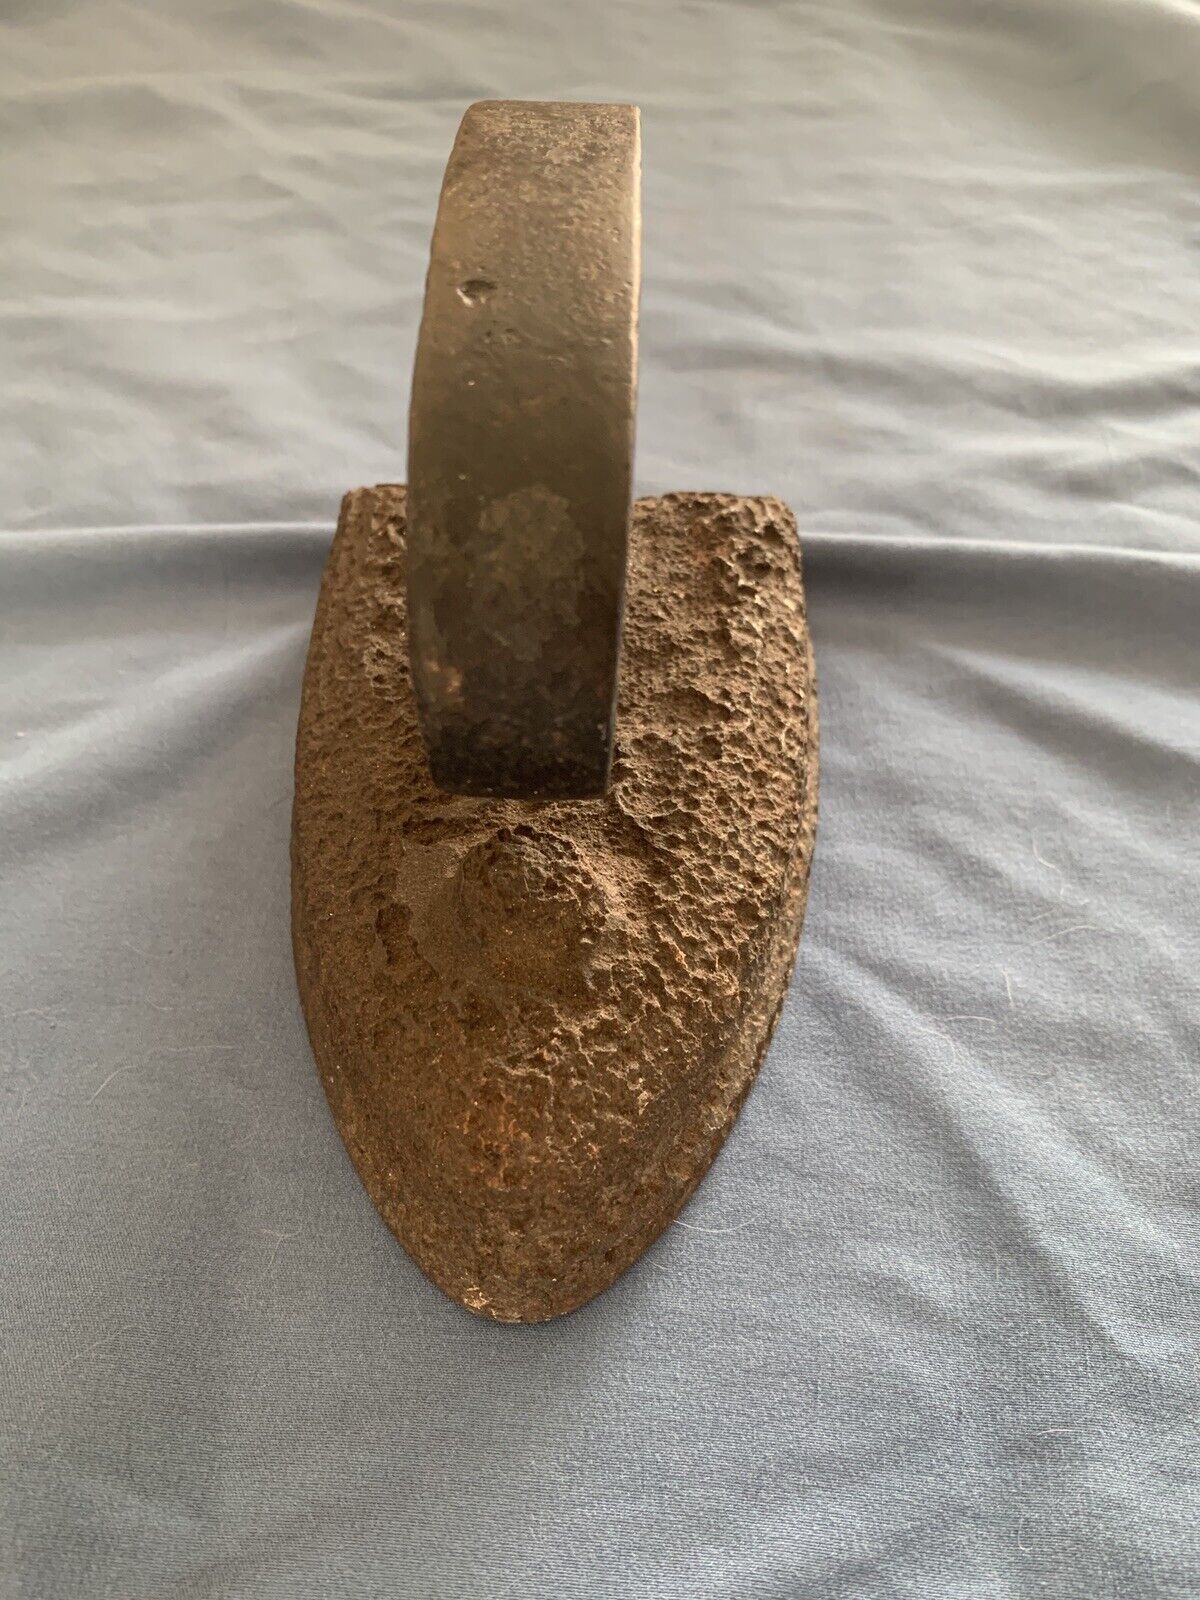 Antique Cast Iron Iron